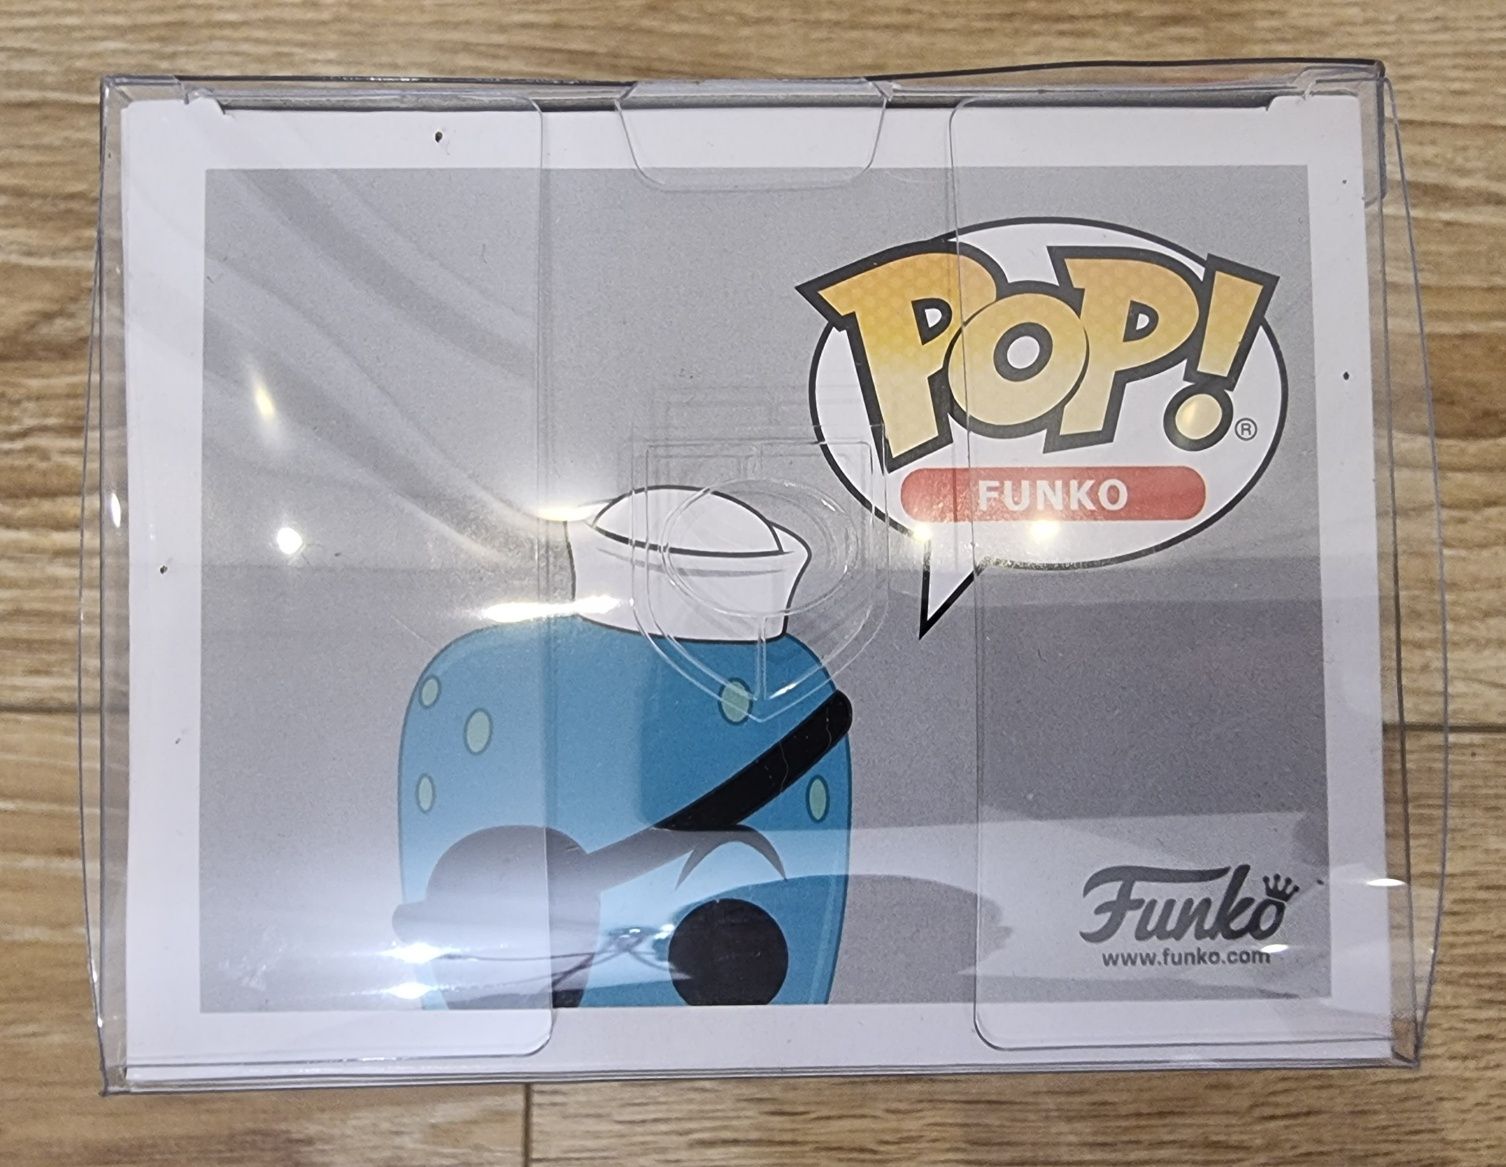 Figurka Funko Pop, Pulpo, limitowana  do 1000 sztuk